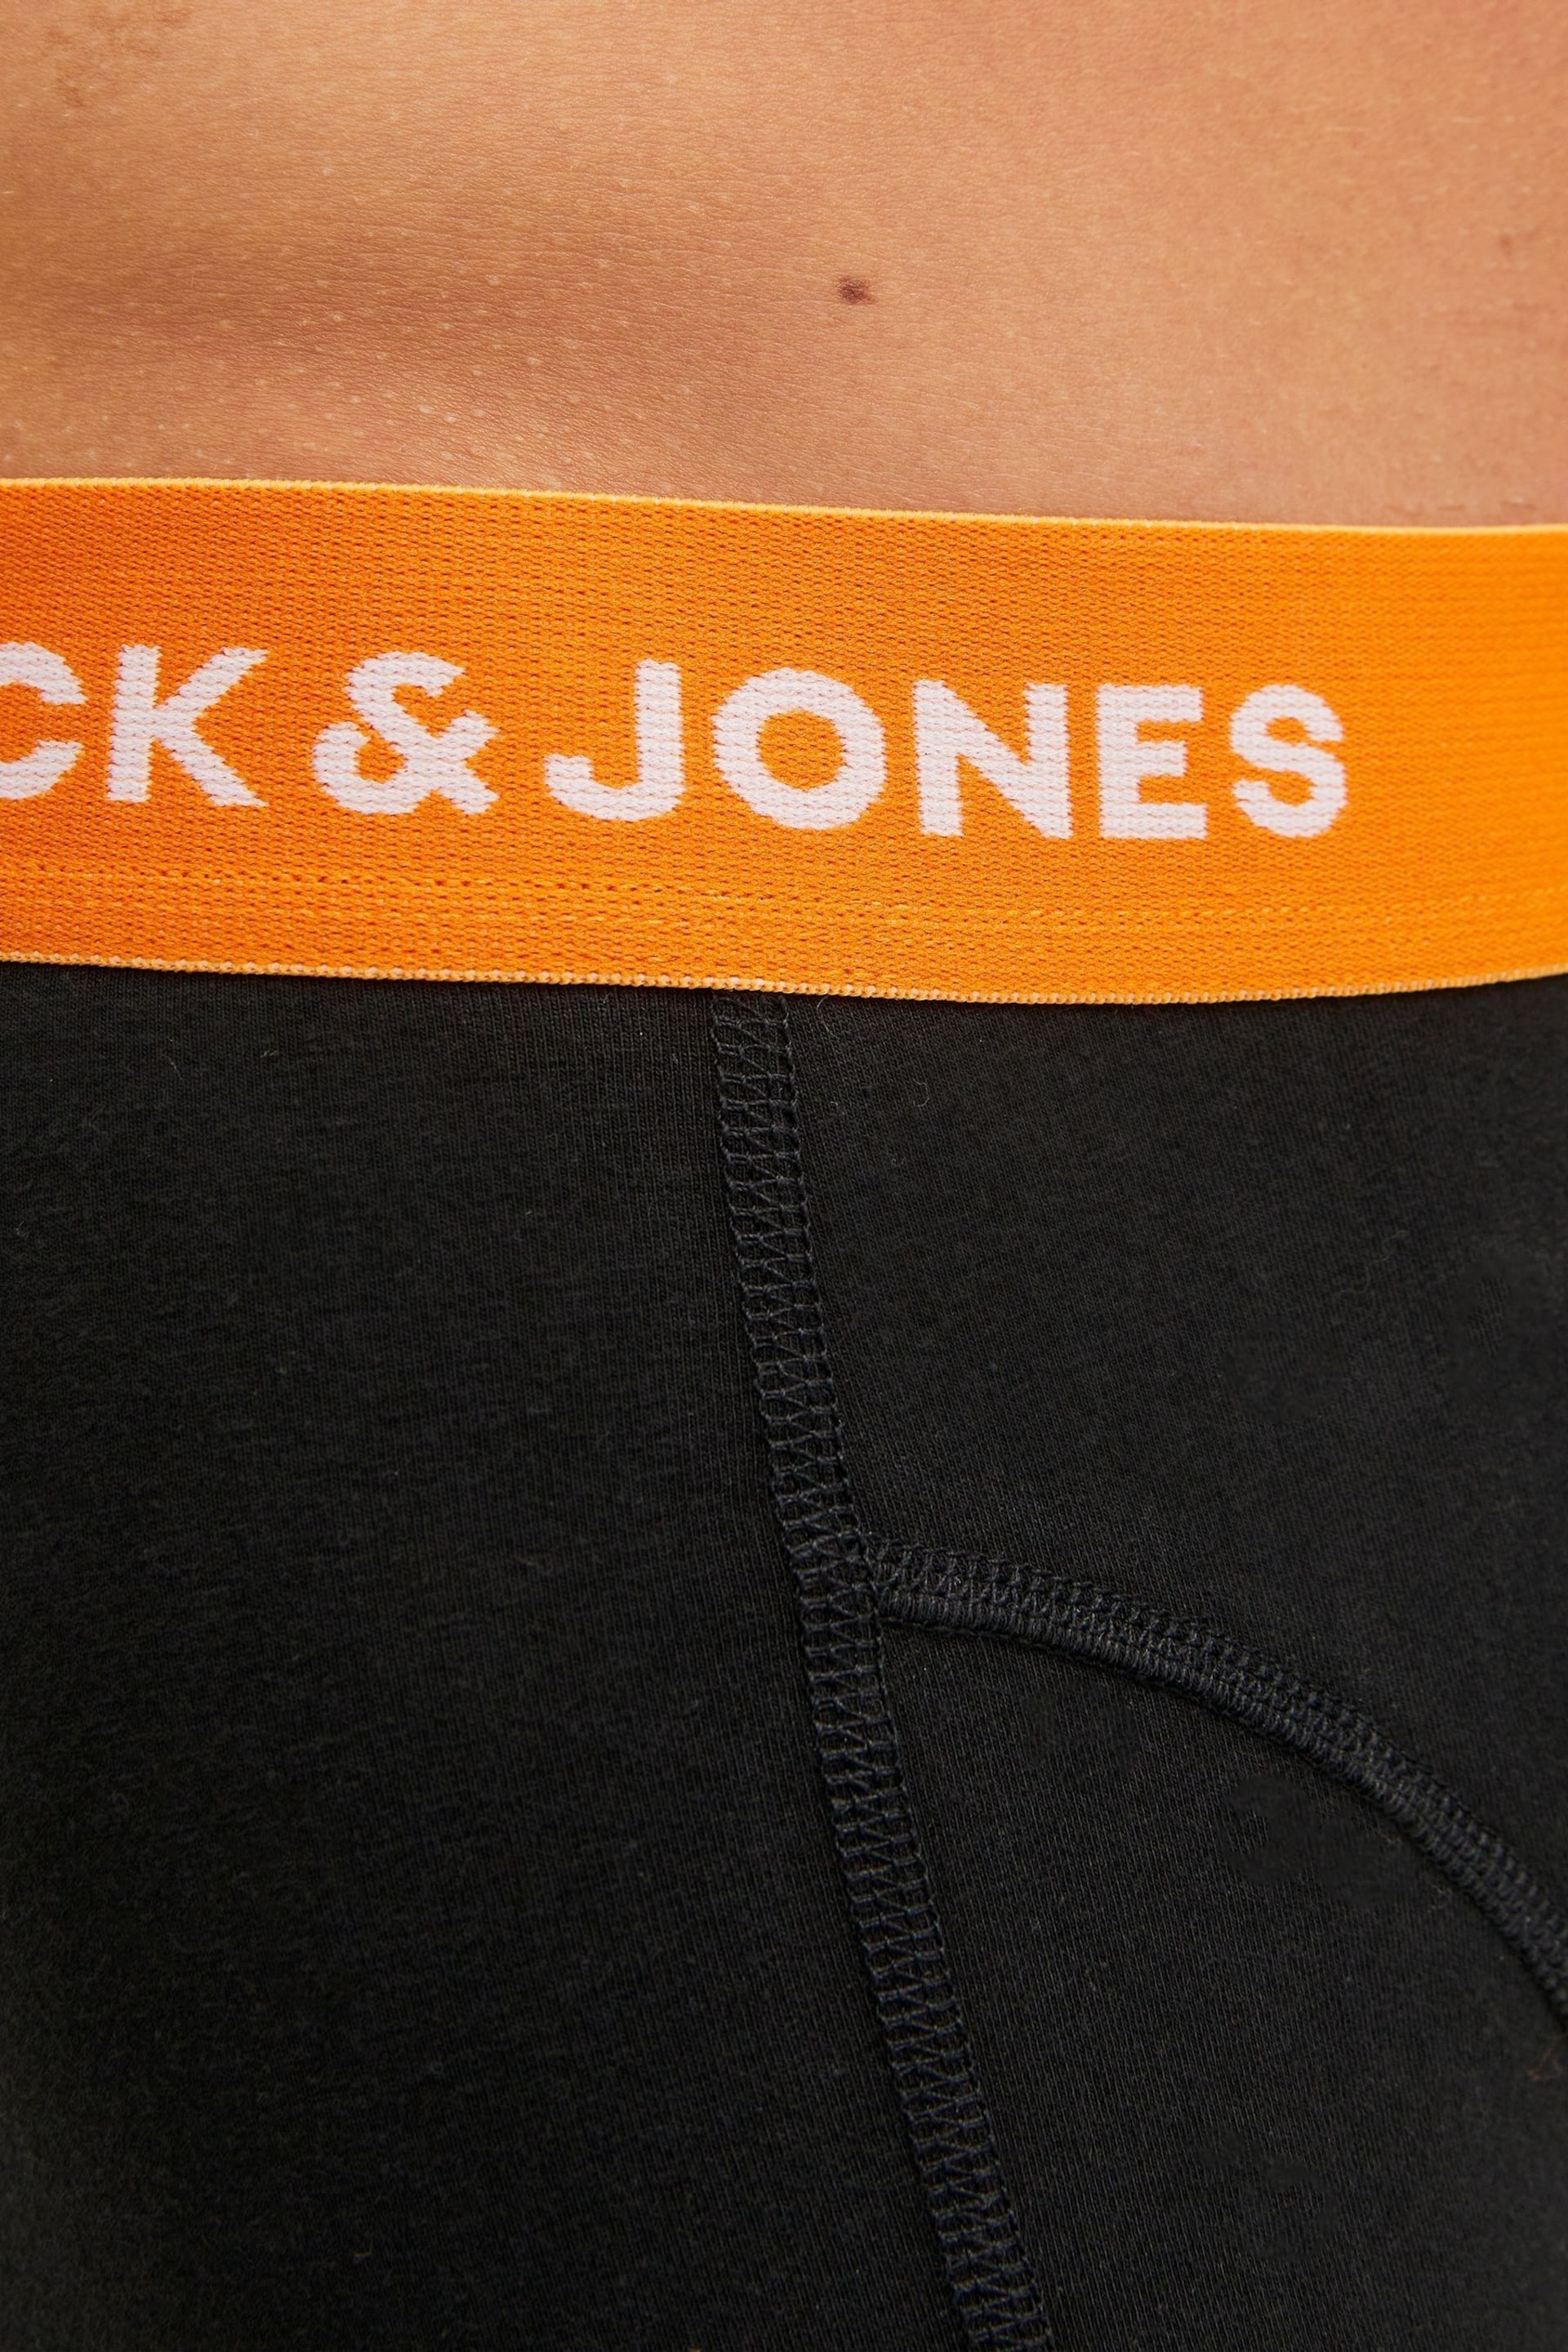 JACK & JONES Navy Black Logo Boxers 3 Pack - Image 5 of 6